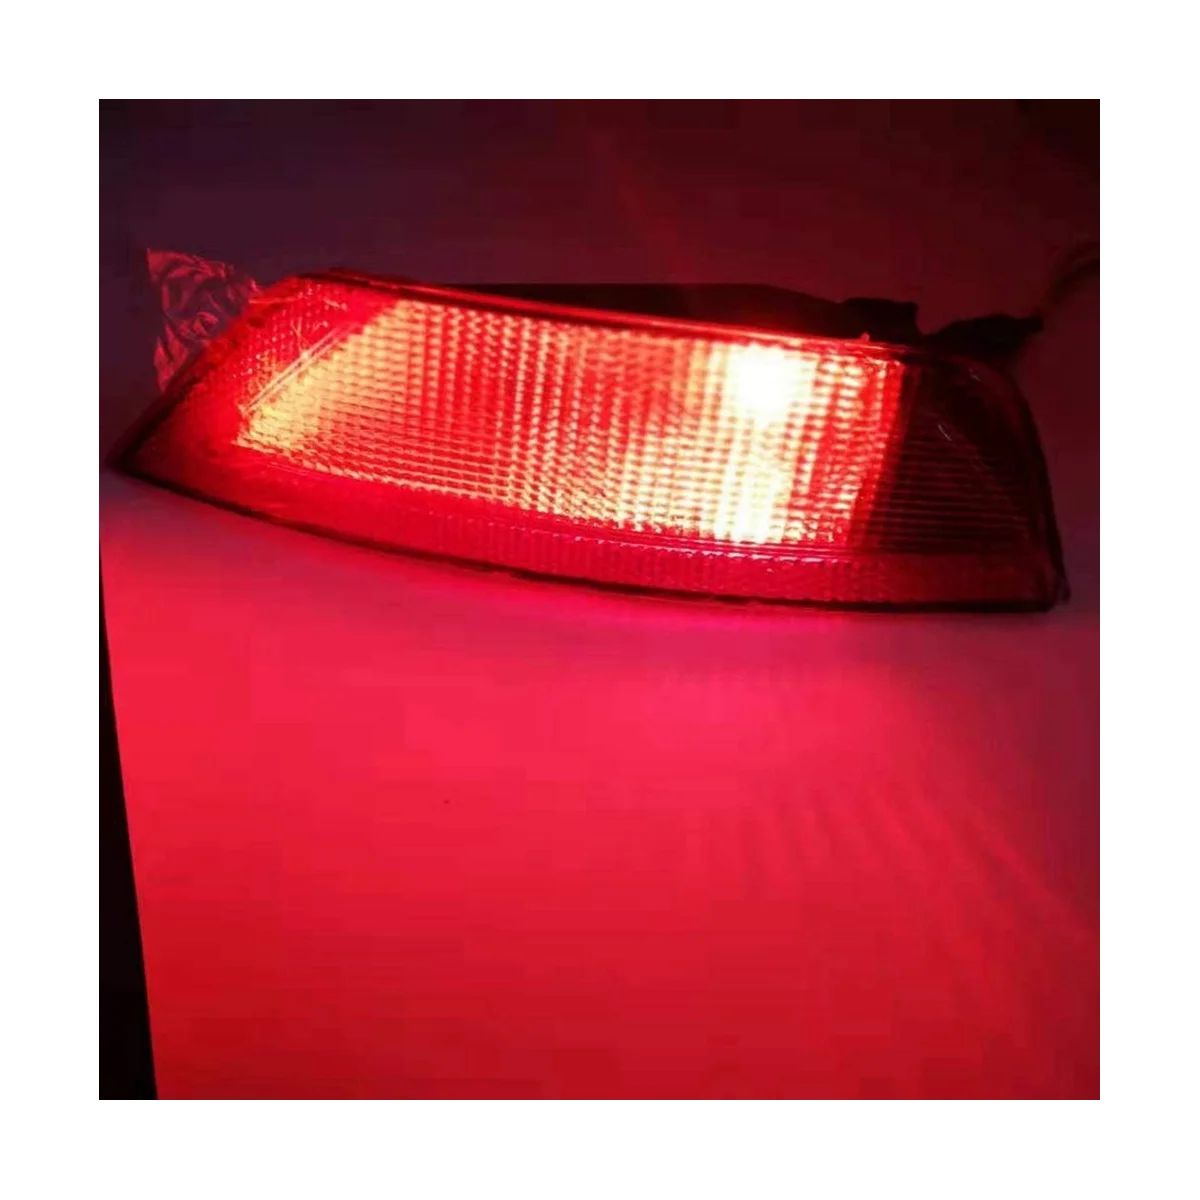 Задний бампер, противотуманный фонарь, задний фонарь заднего хода для Ford Kuga 2008-2012 1507101 1505706 Изображение 5